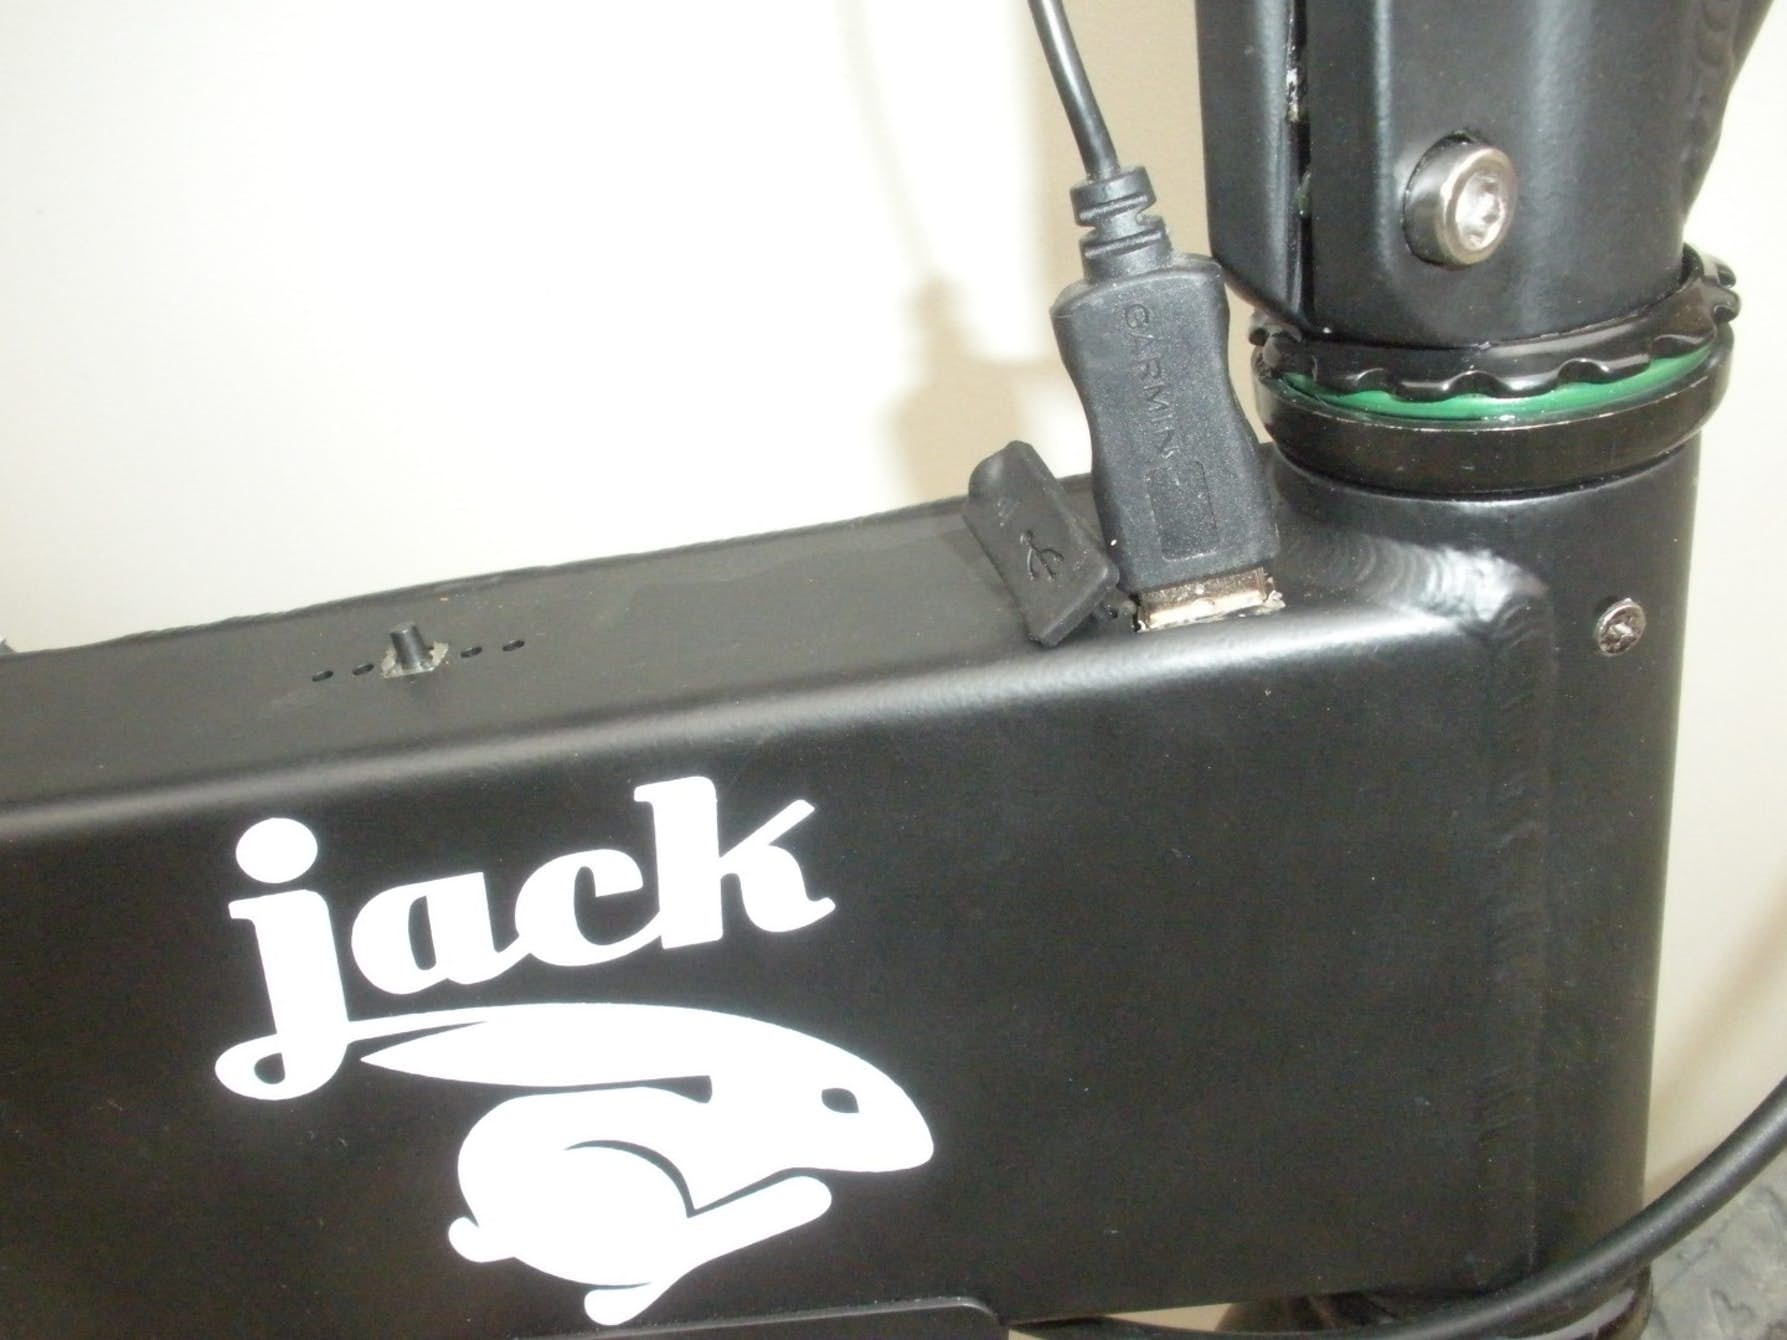 jackrabbit-electric-scooter-6.jpg